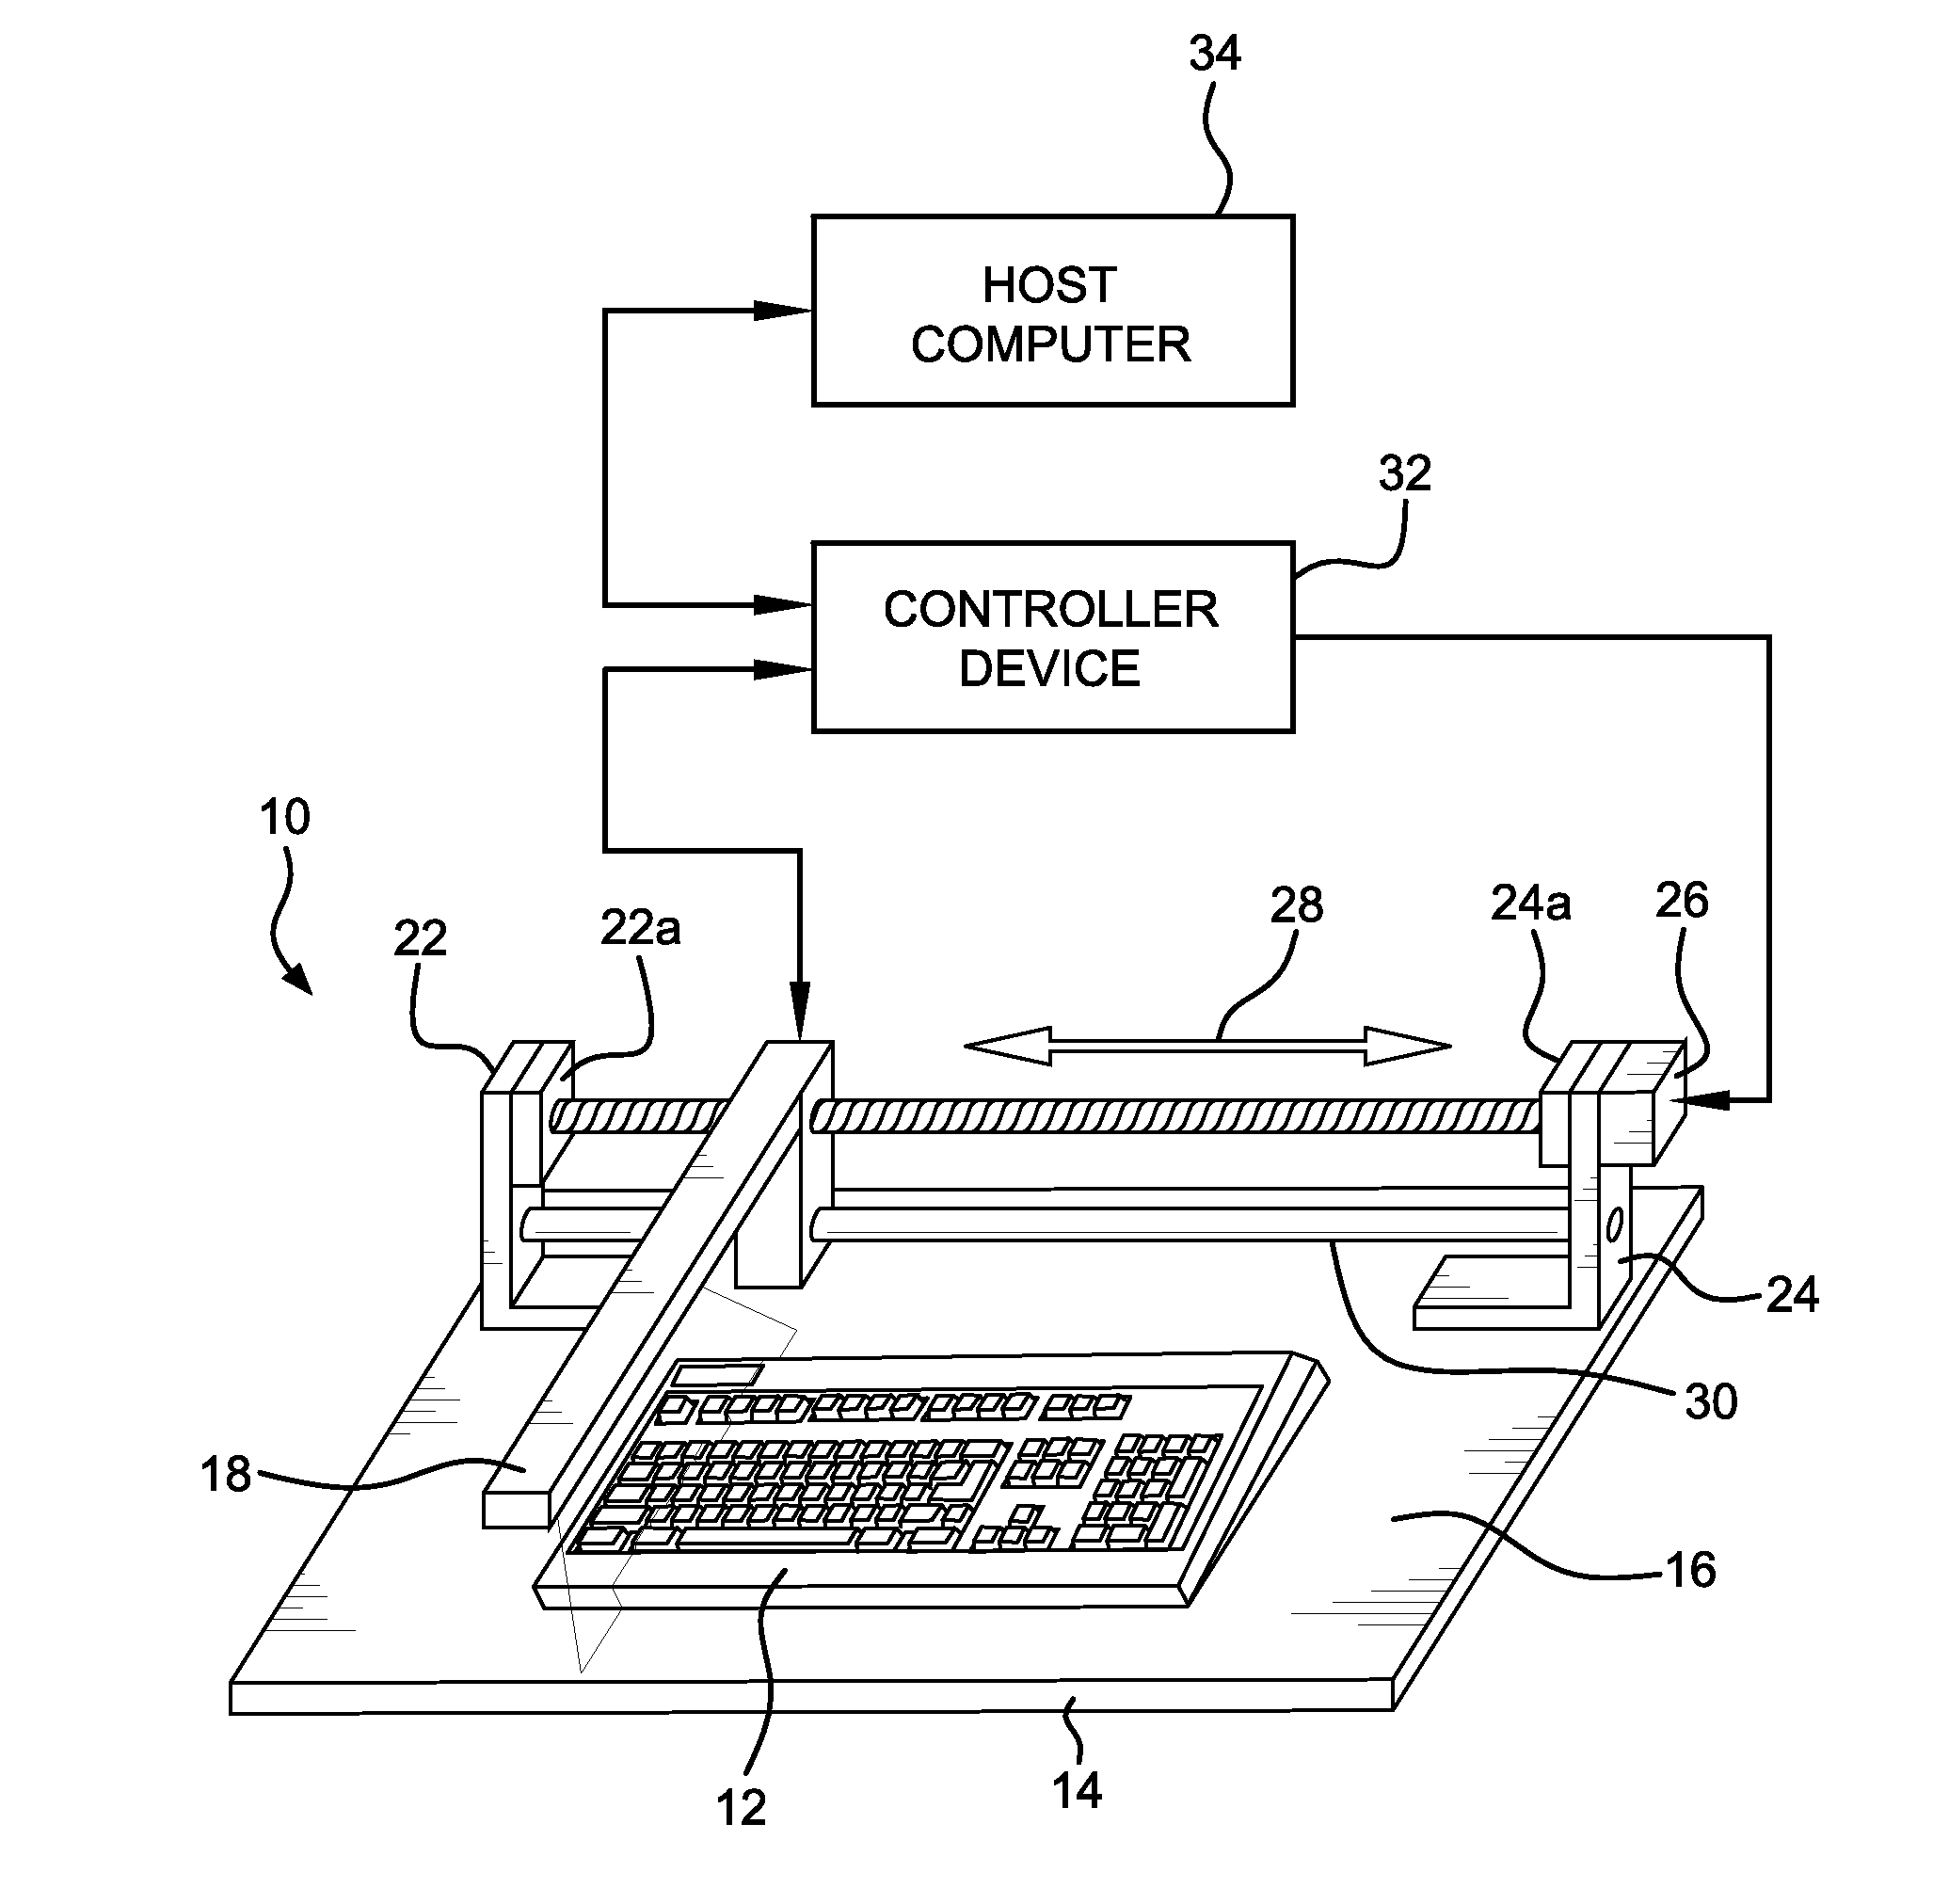 Computer peripherals sterilization system